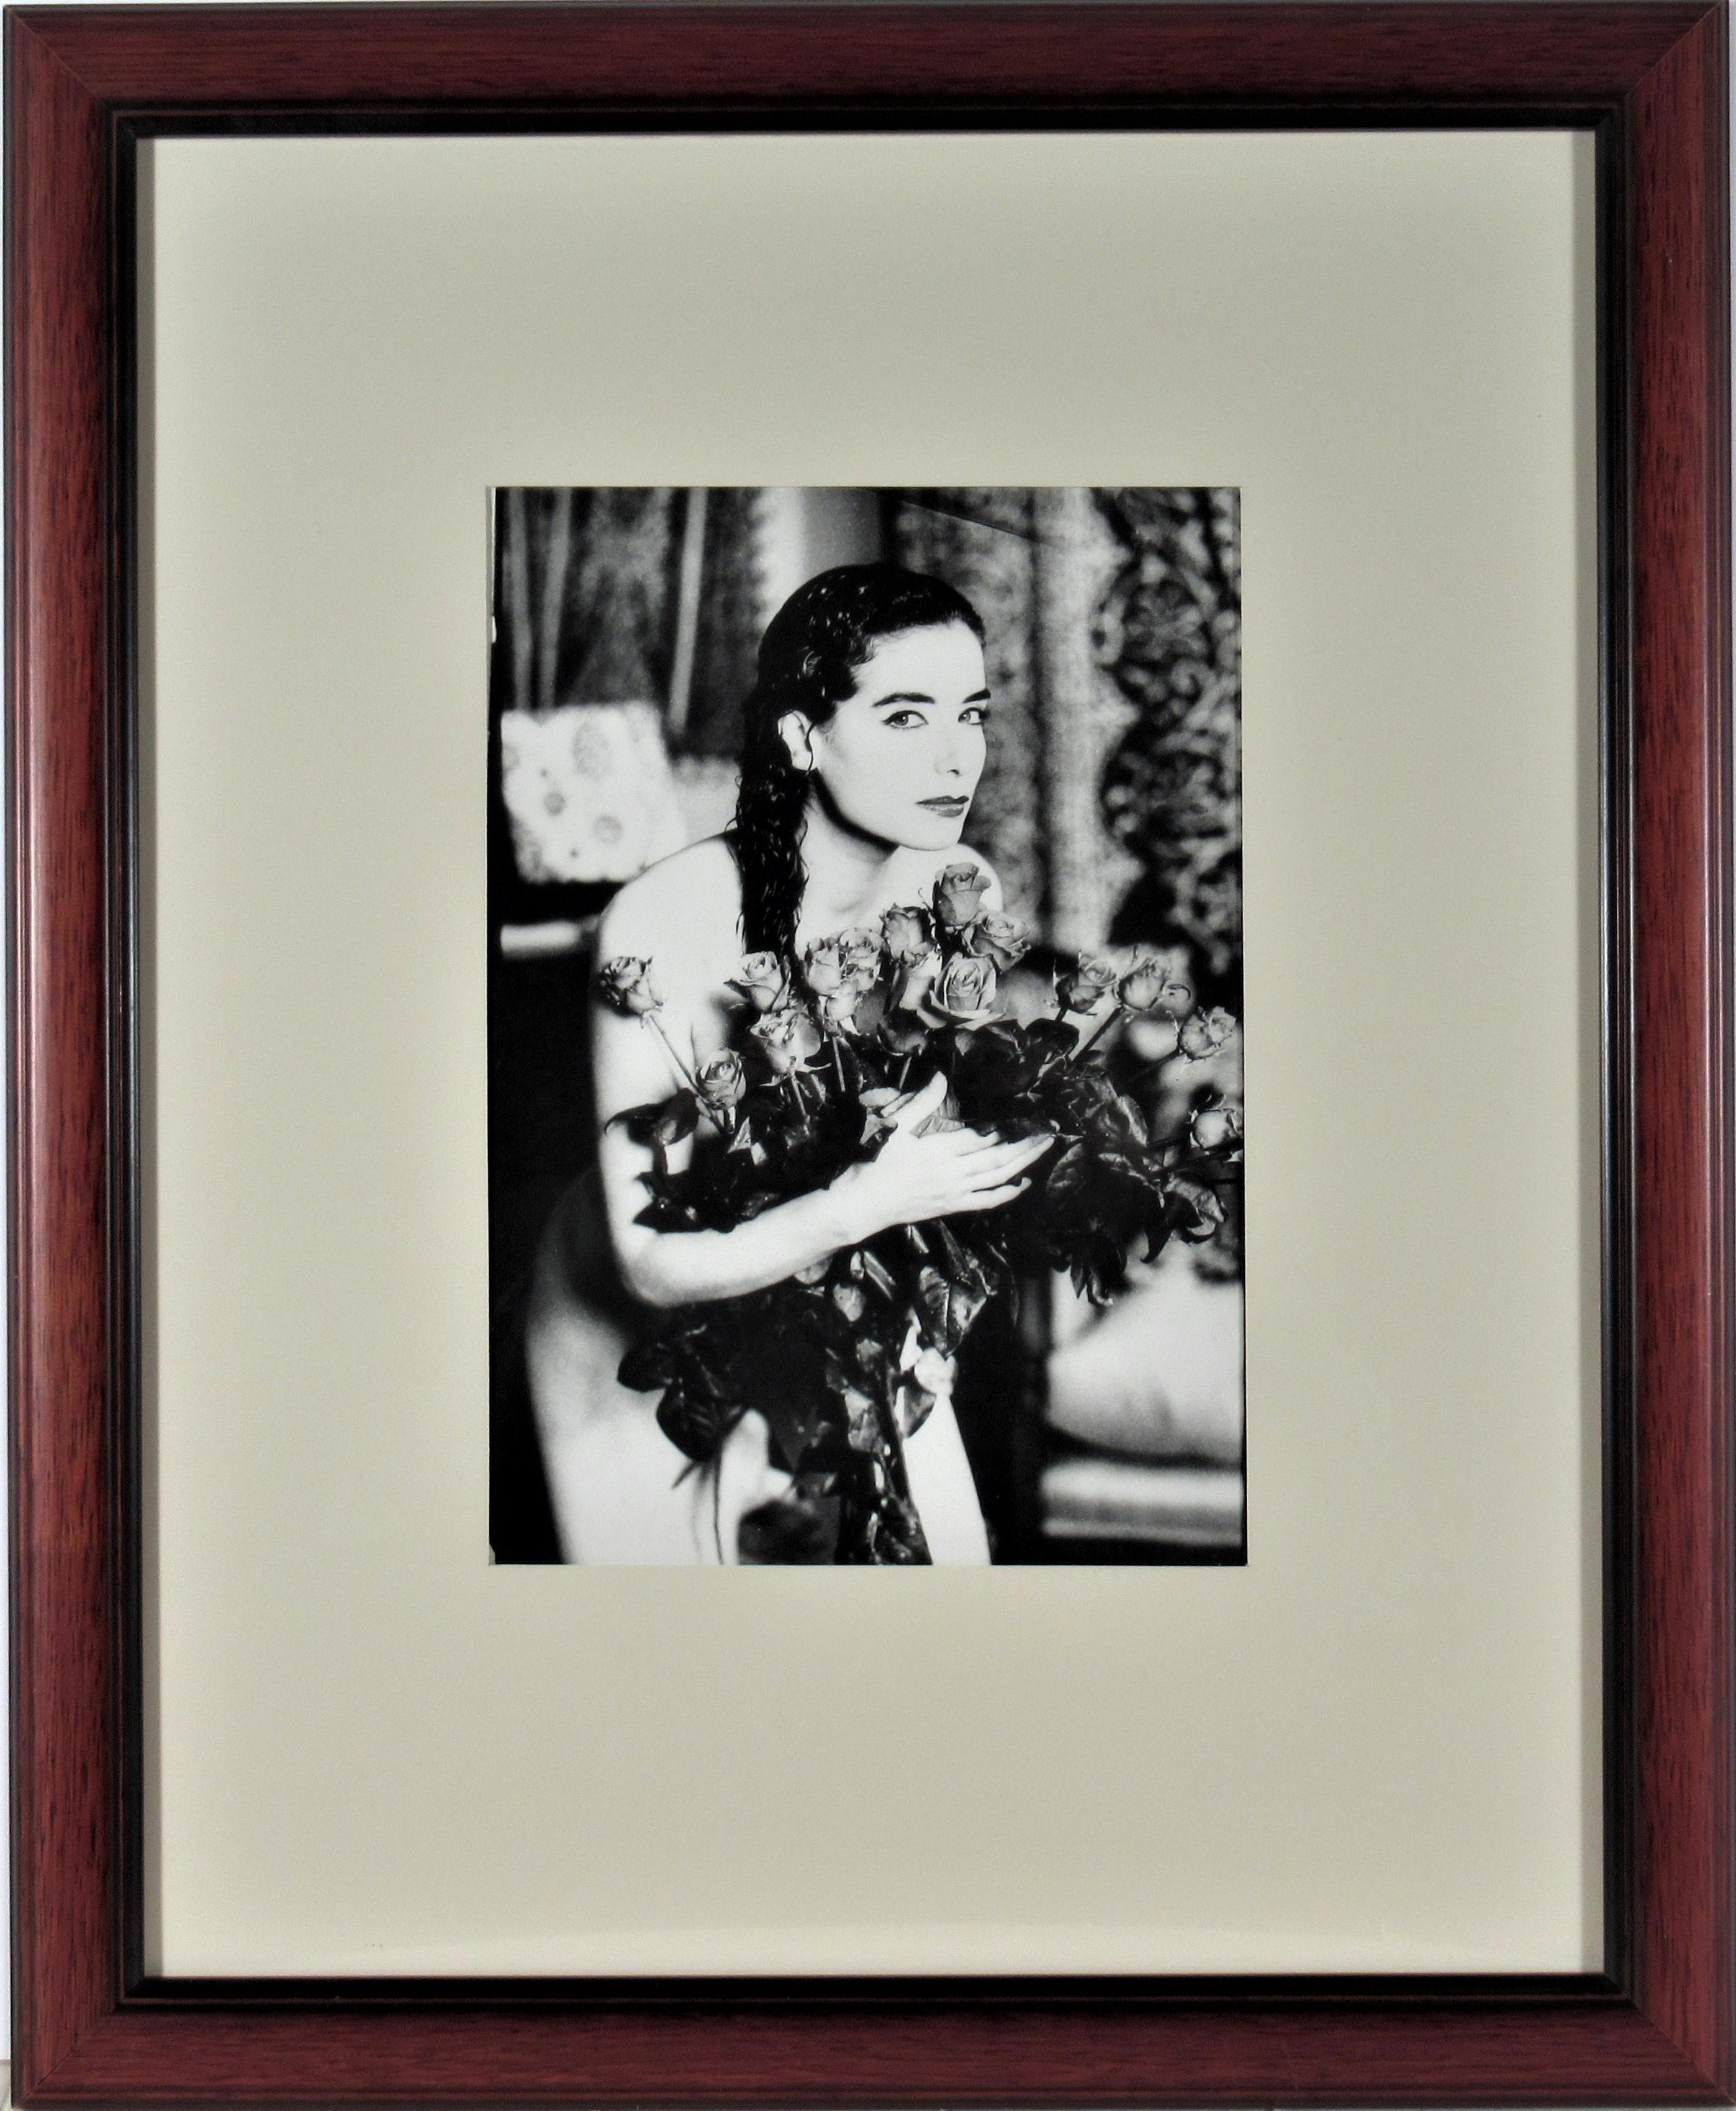 Michael Andreas Russ Black and White Photograph – Ohne Titel, Frau mit Blumen